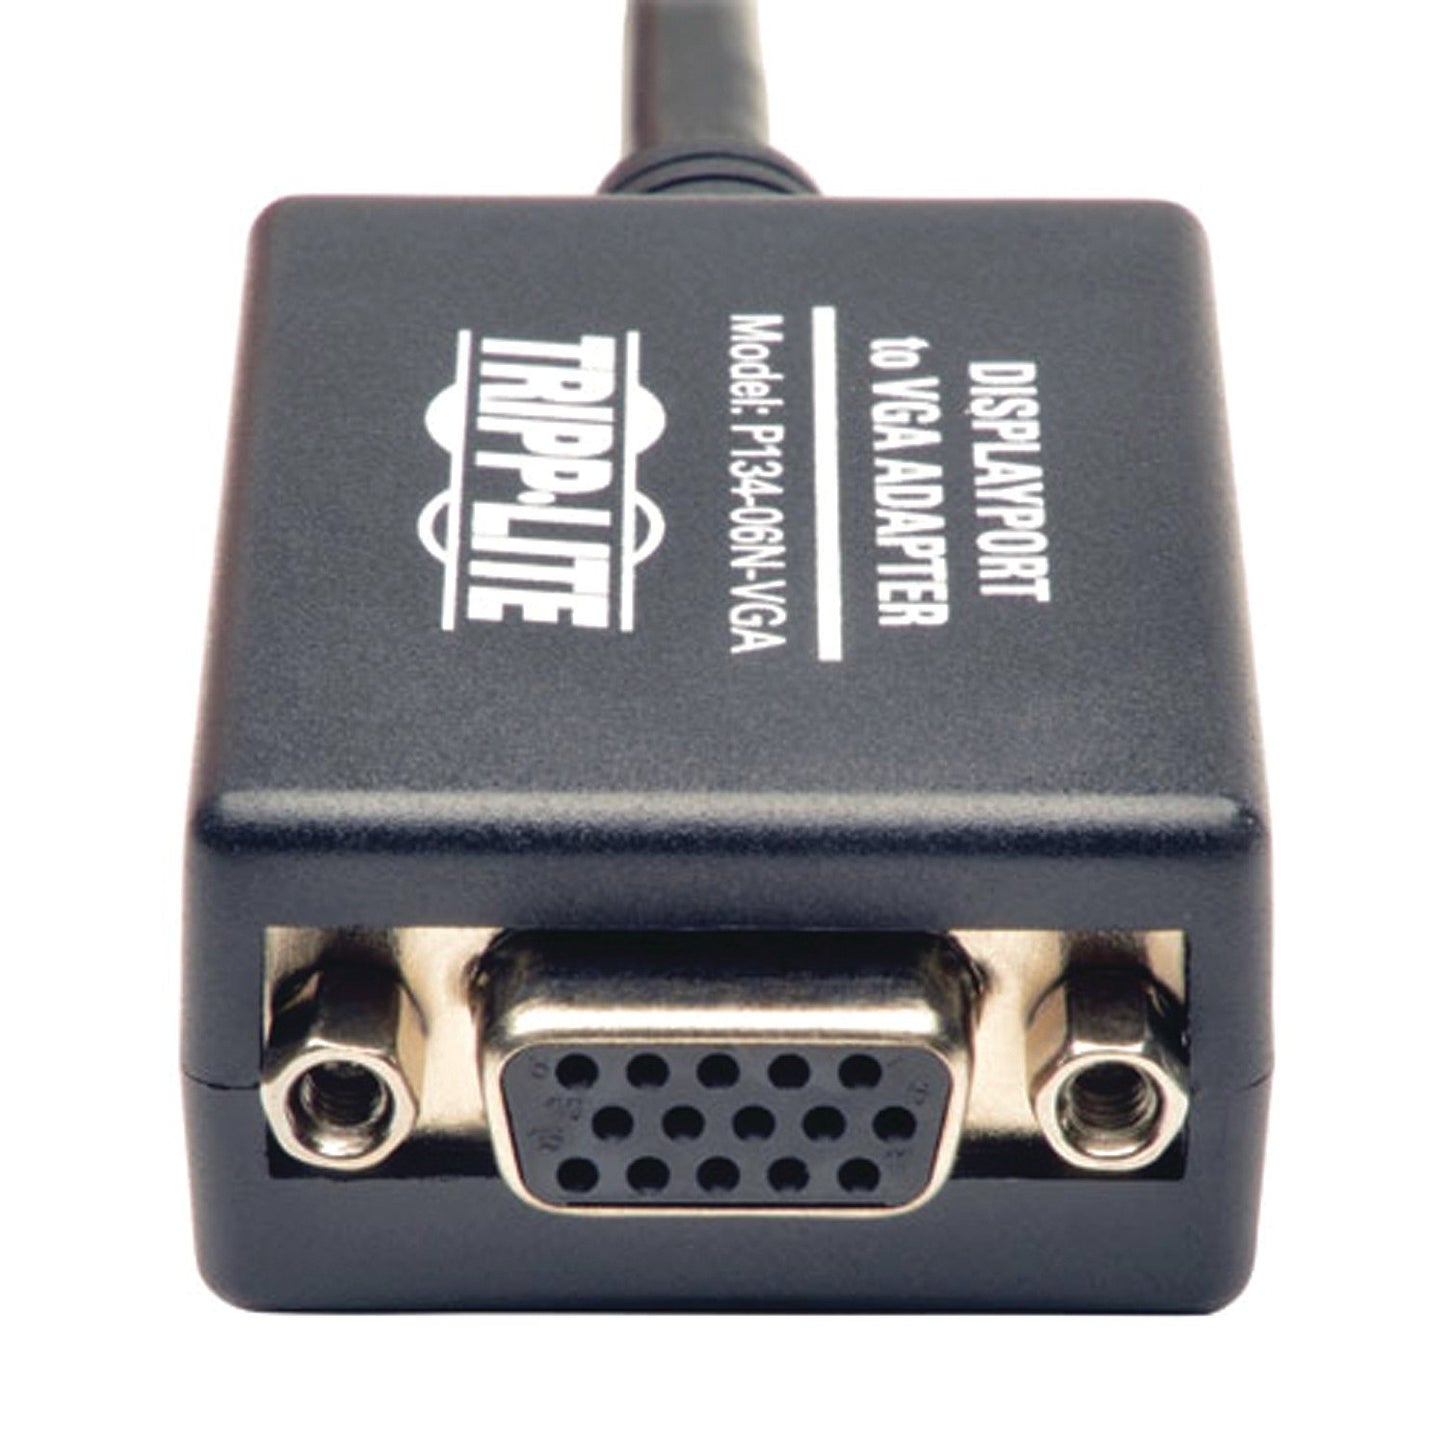 TRIPP LITE P134-06N-VGA DisplayPort/VGA Cable Adaptor